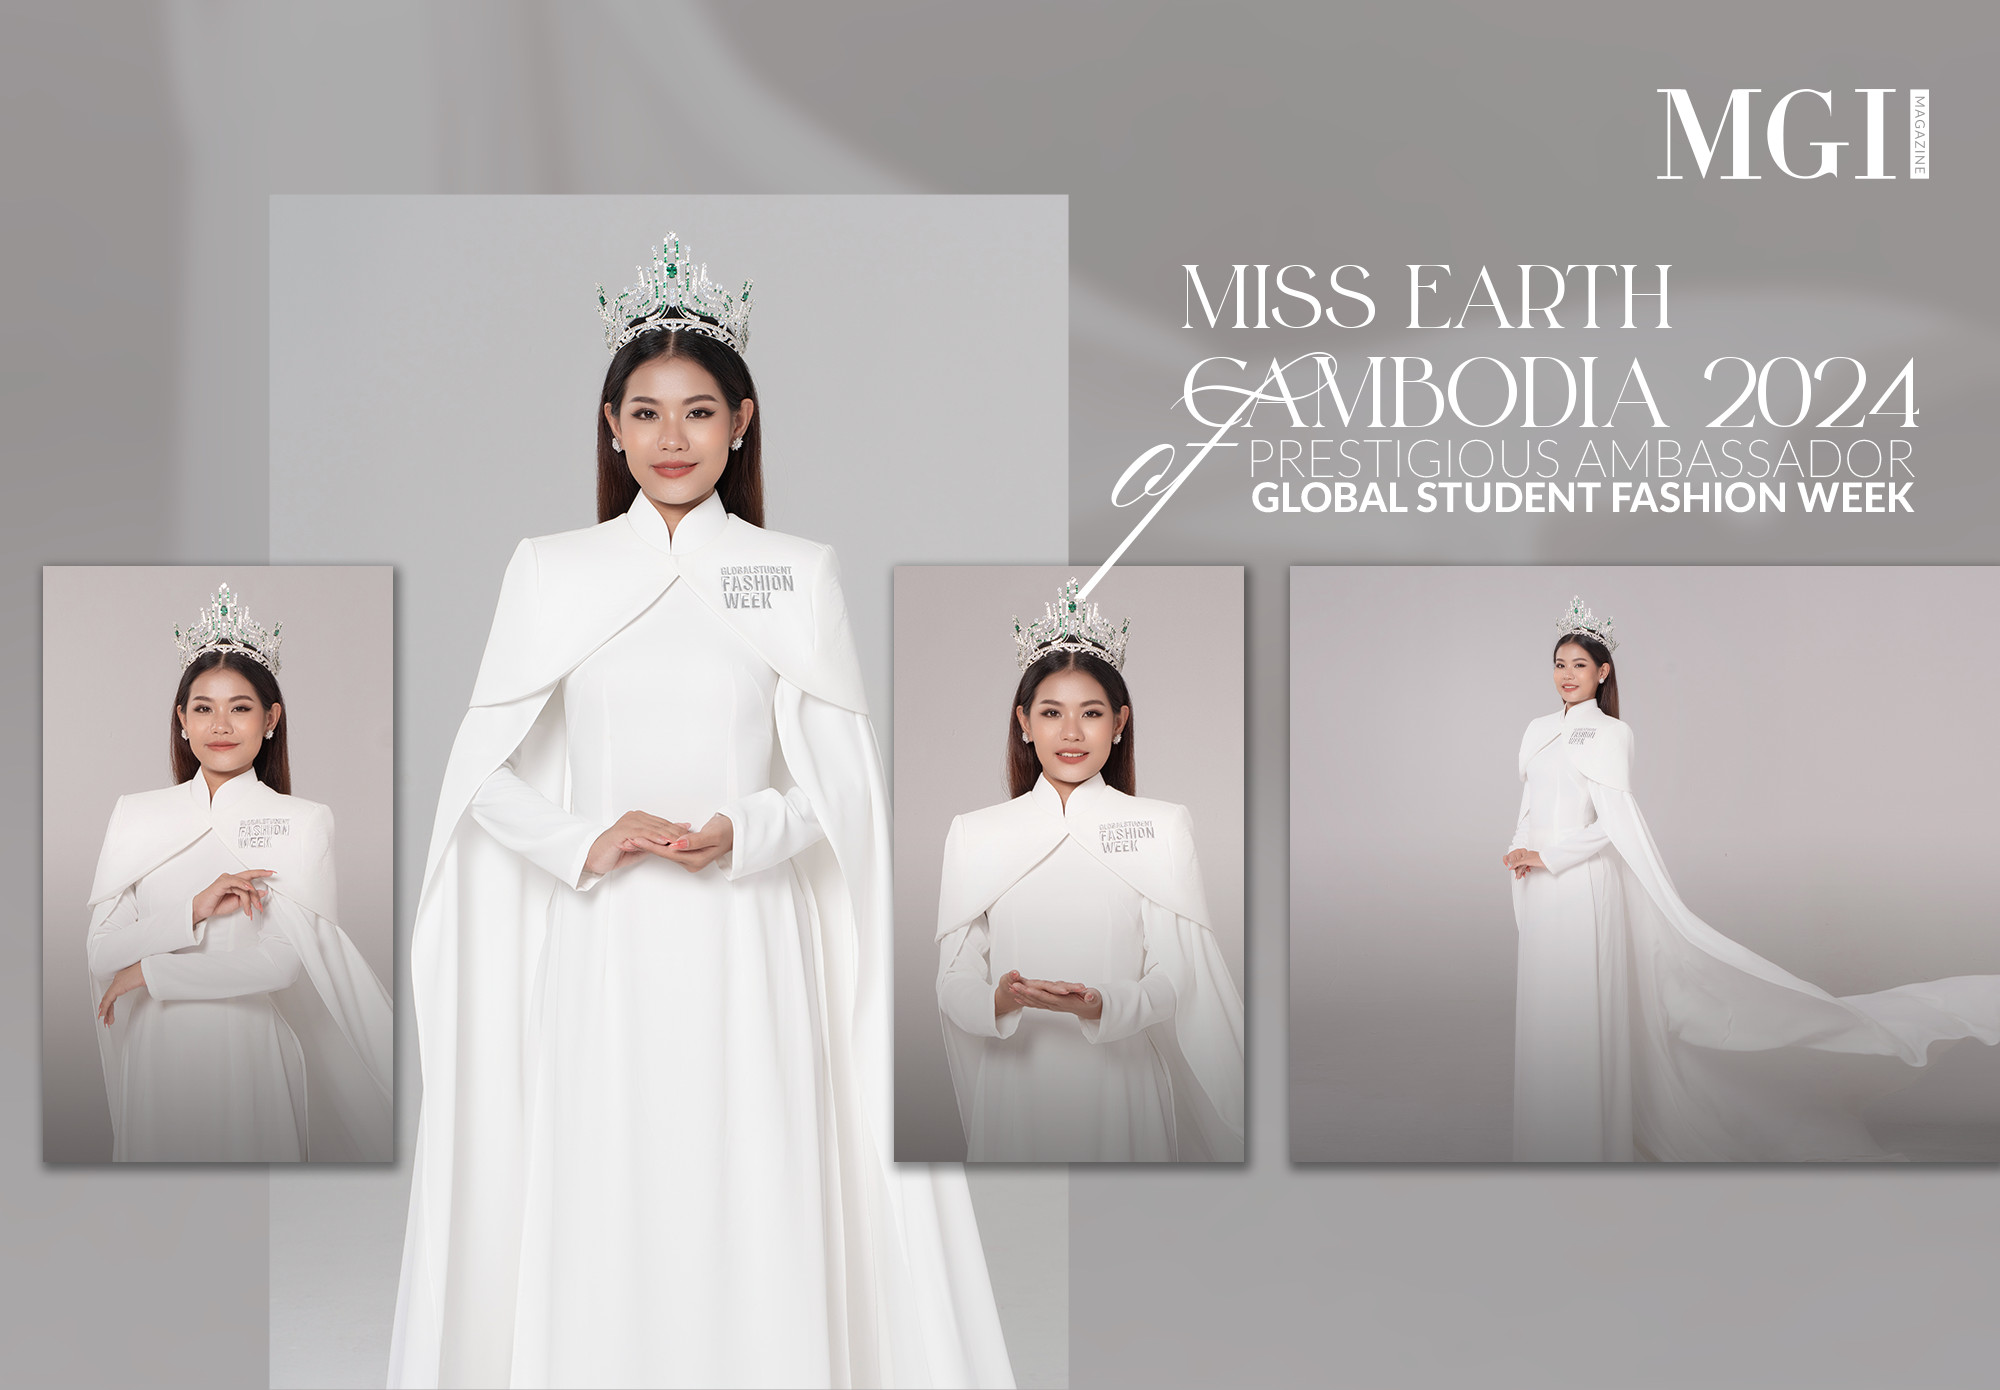 Miss Earth Cambodia 2024 - Prestigious ambassador of Global Student Fashion Week